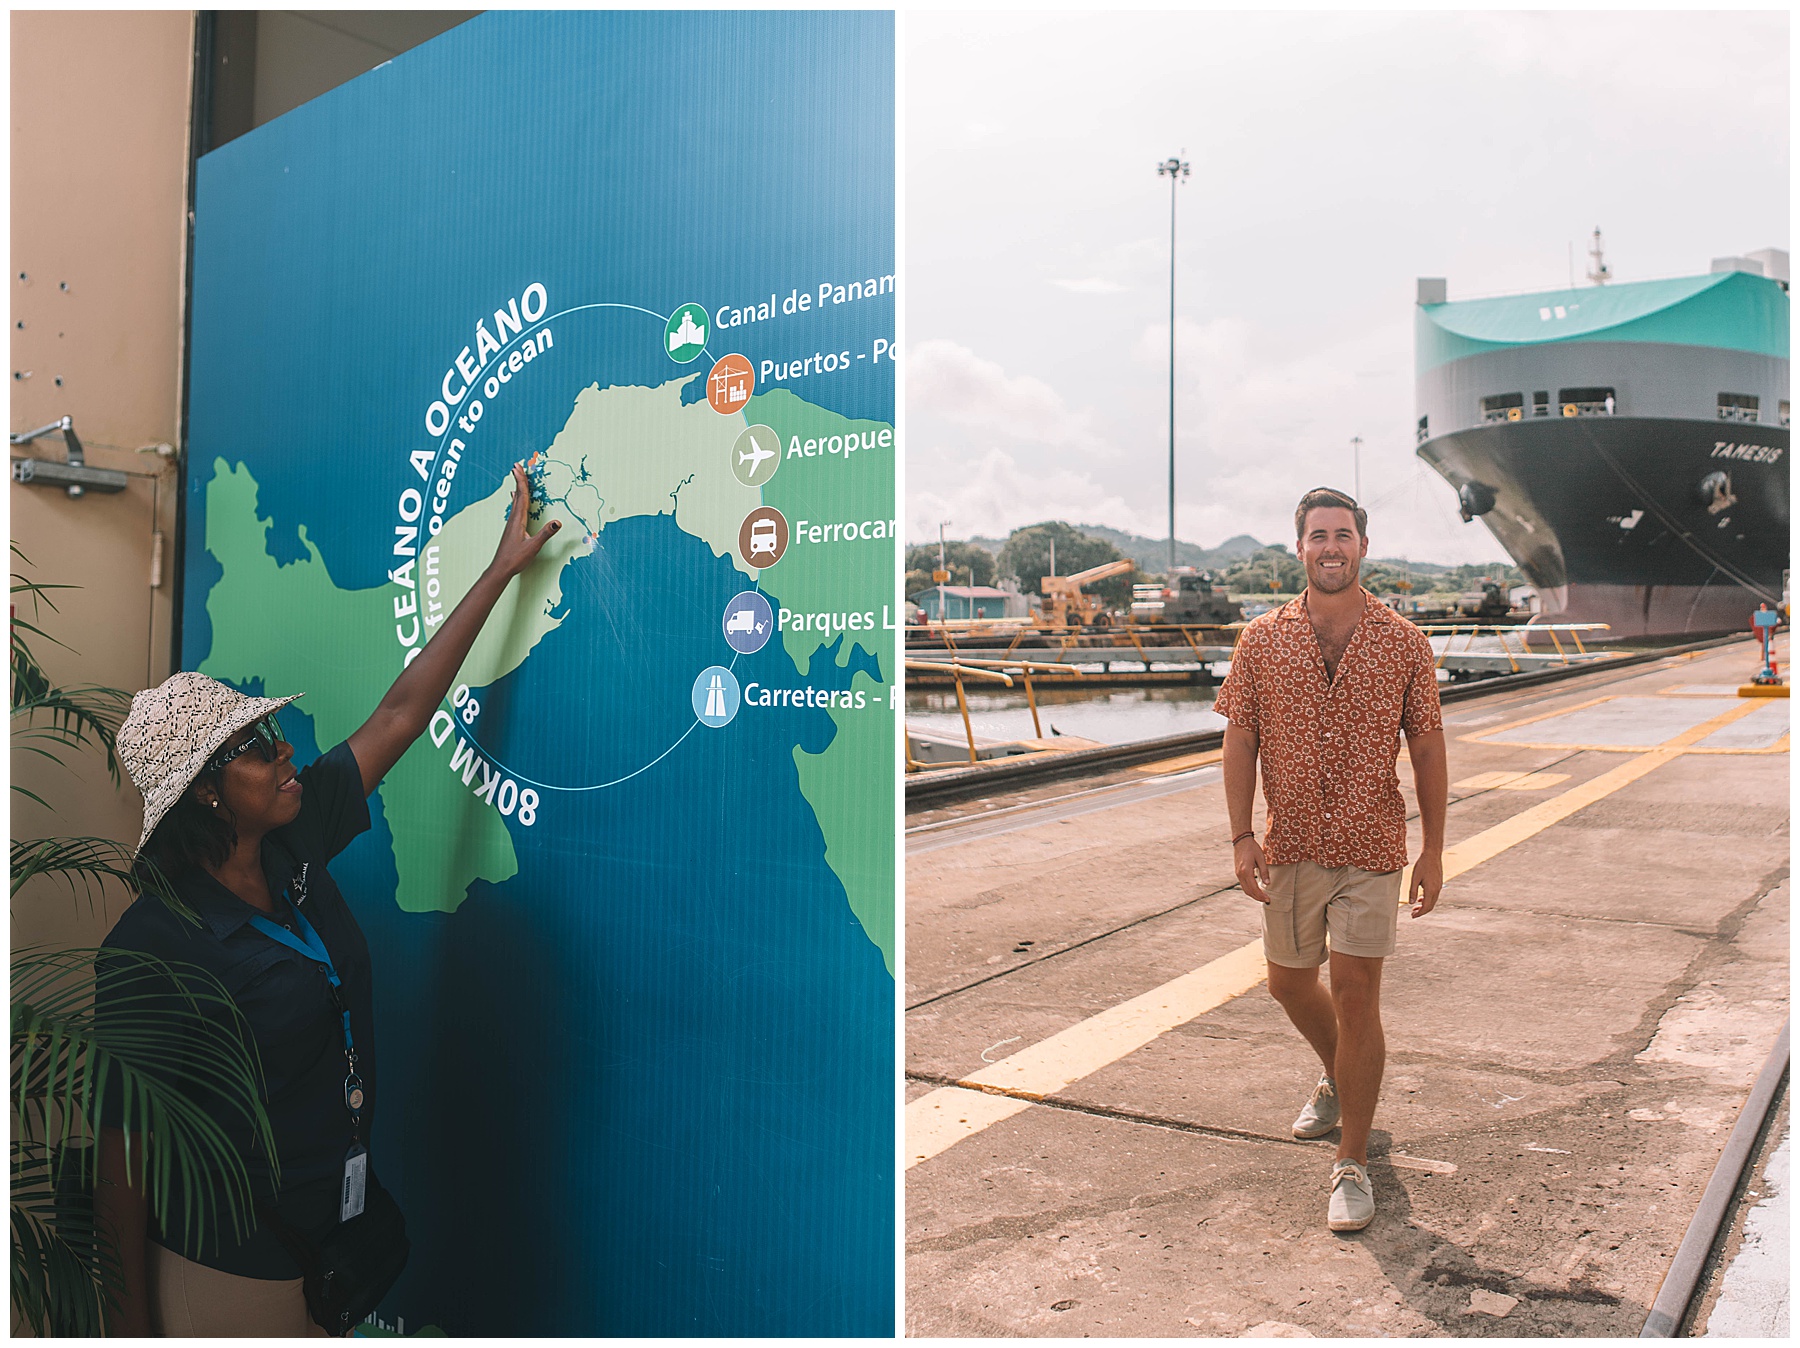 John Philp Thompson Travel Panama City Guide 